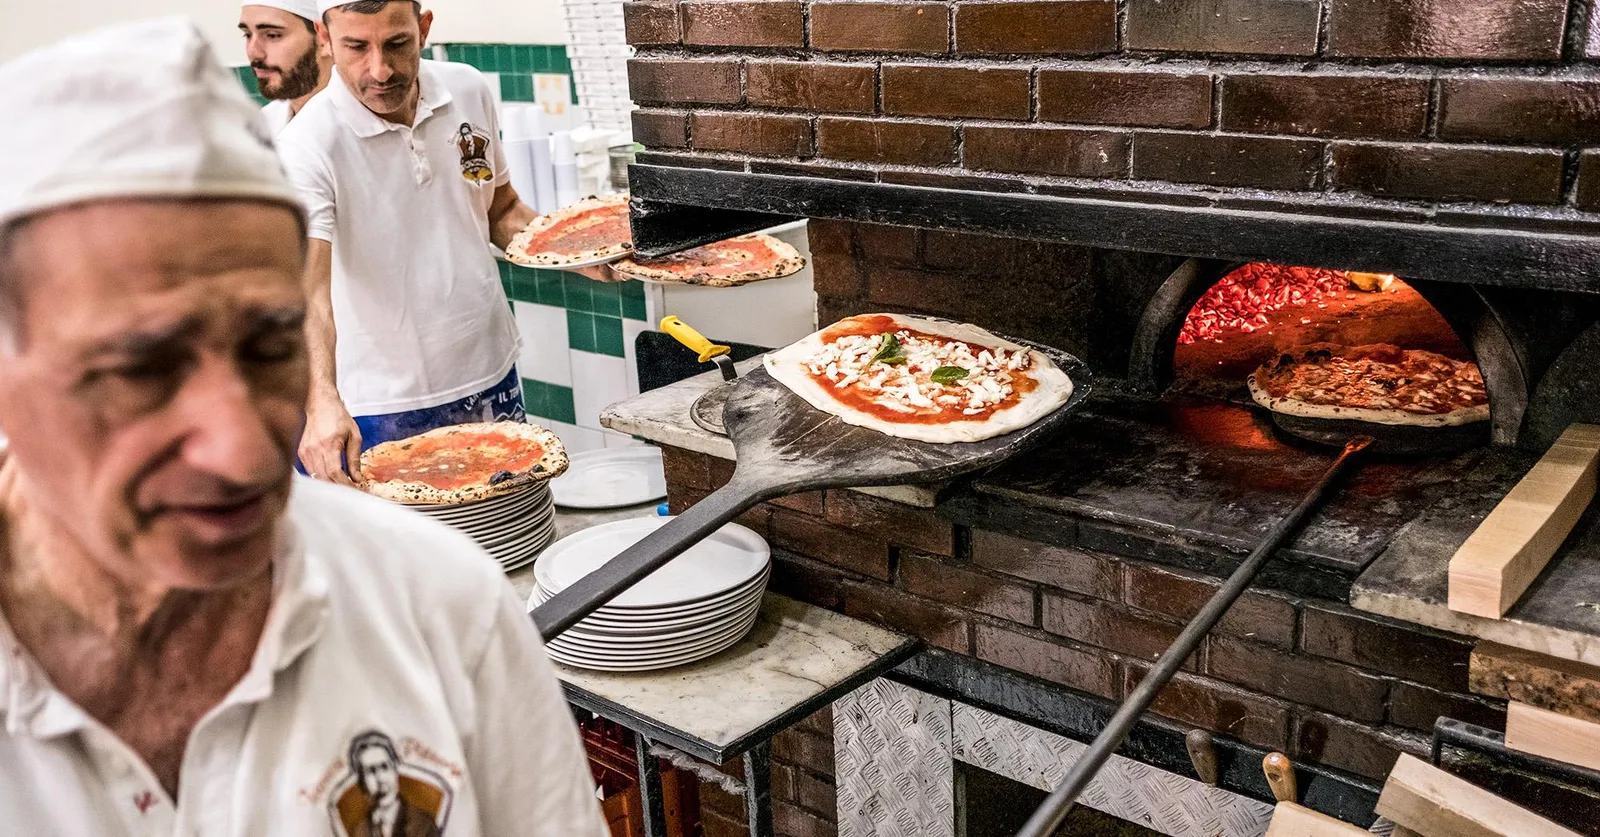  Fresh Hot Pizza Flag Pizzeria Italian Restaurant